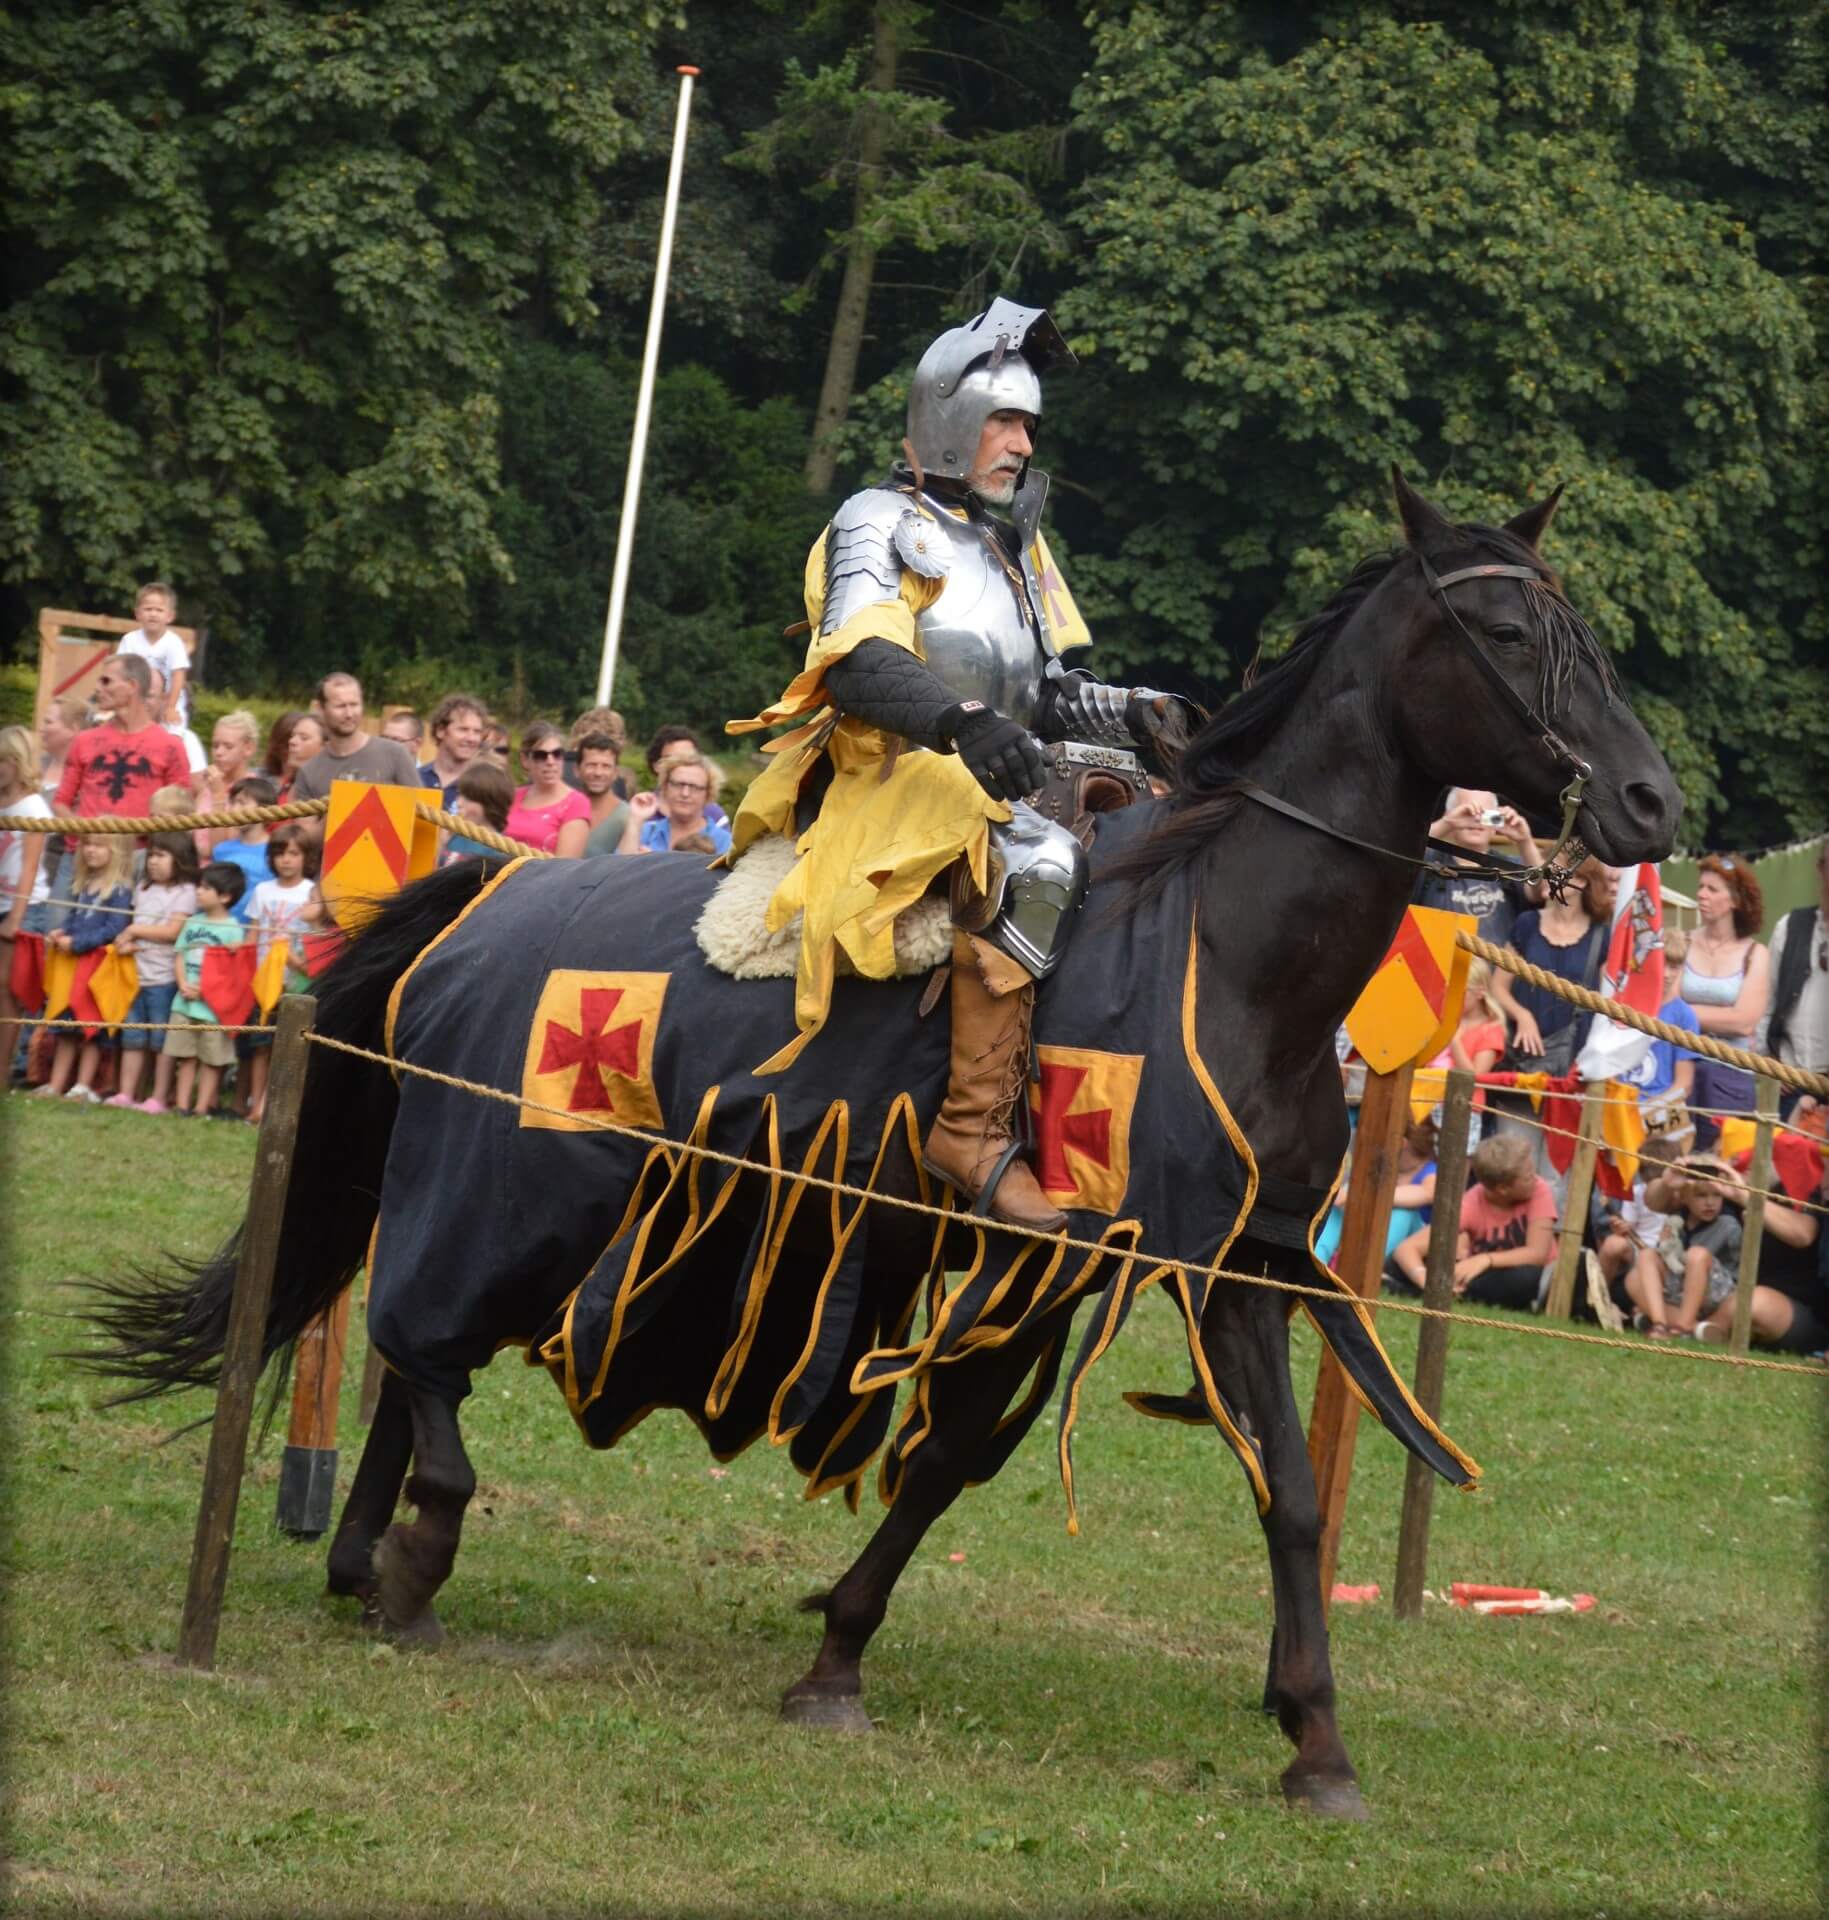 The original freelancer - a knight on a horse